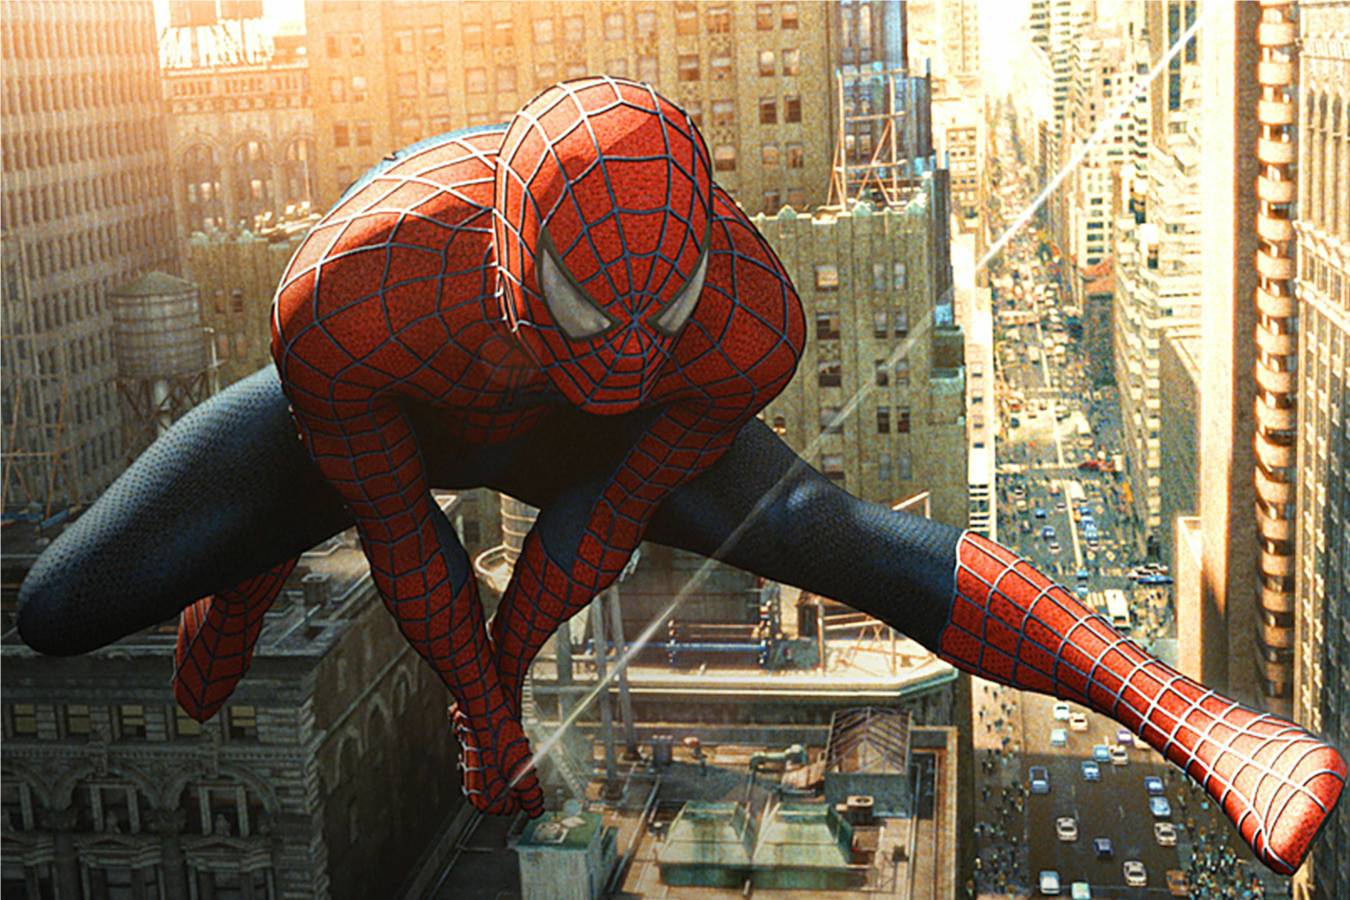 Spiderman wallpaper widescreen. Funny & Amazing Image